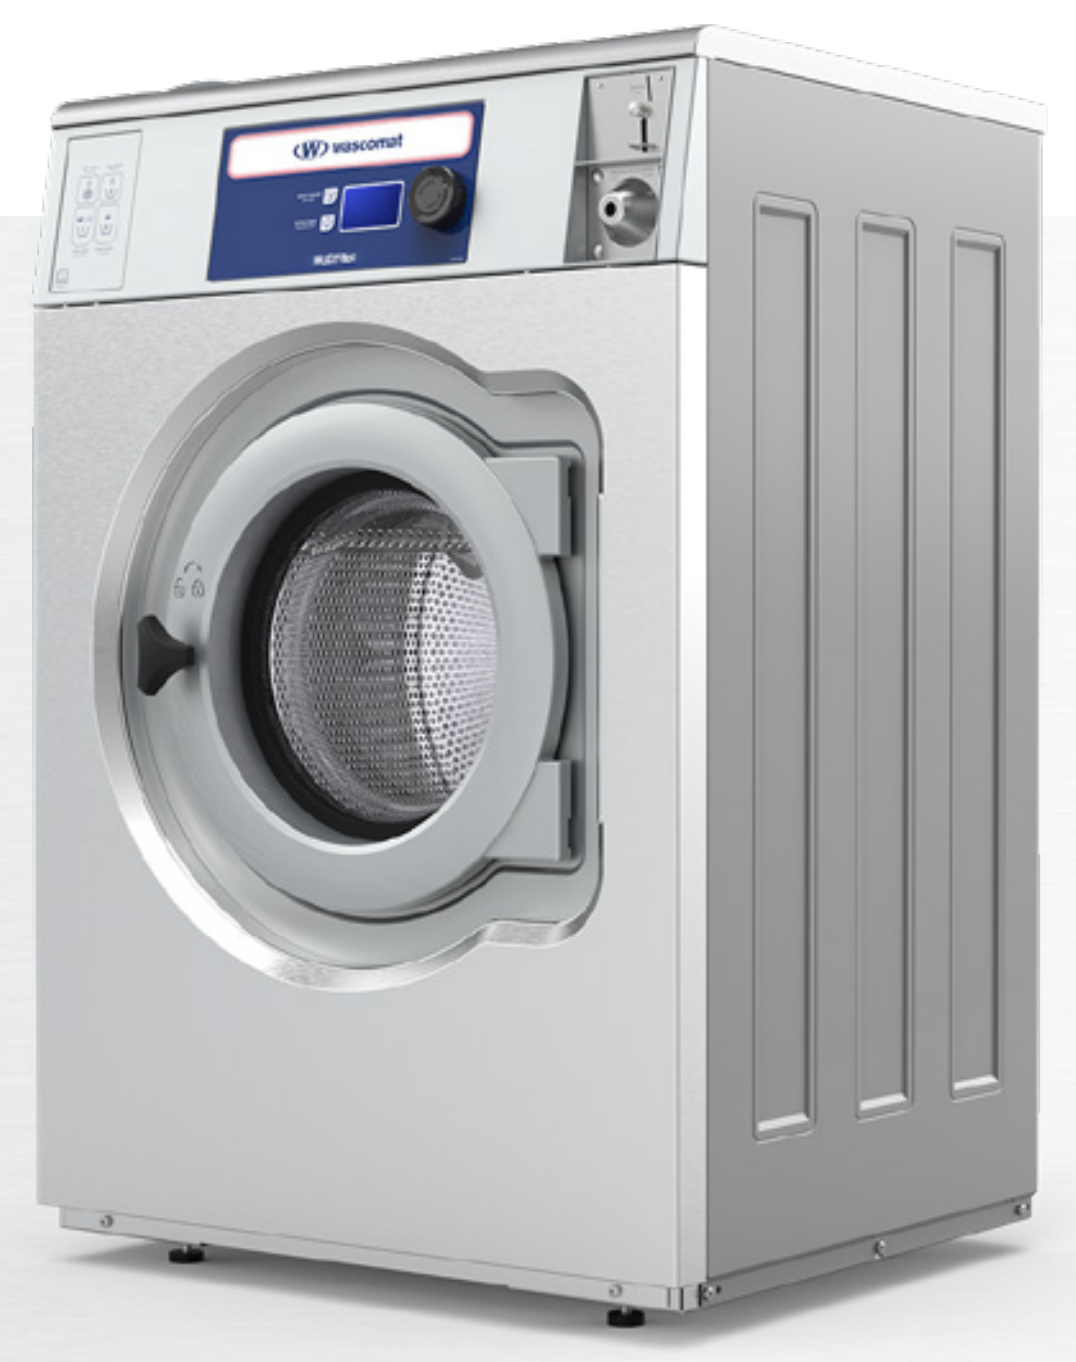 New 2022 Wascomat Wud725 - Lakeside Laundry Equipment